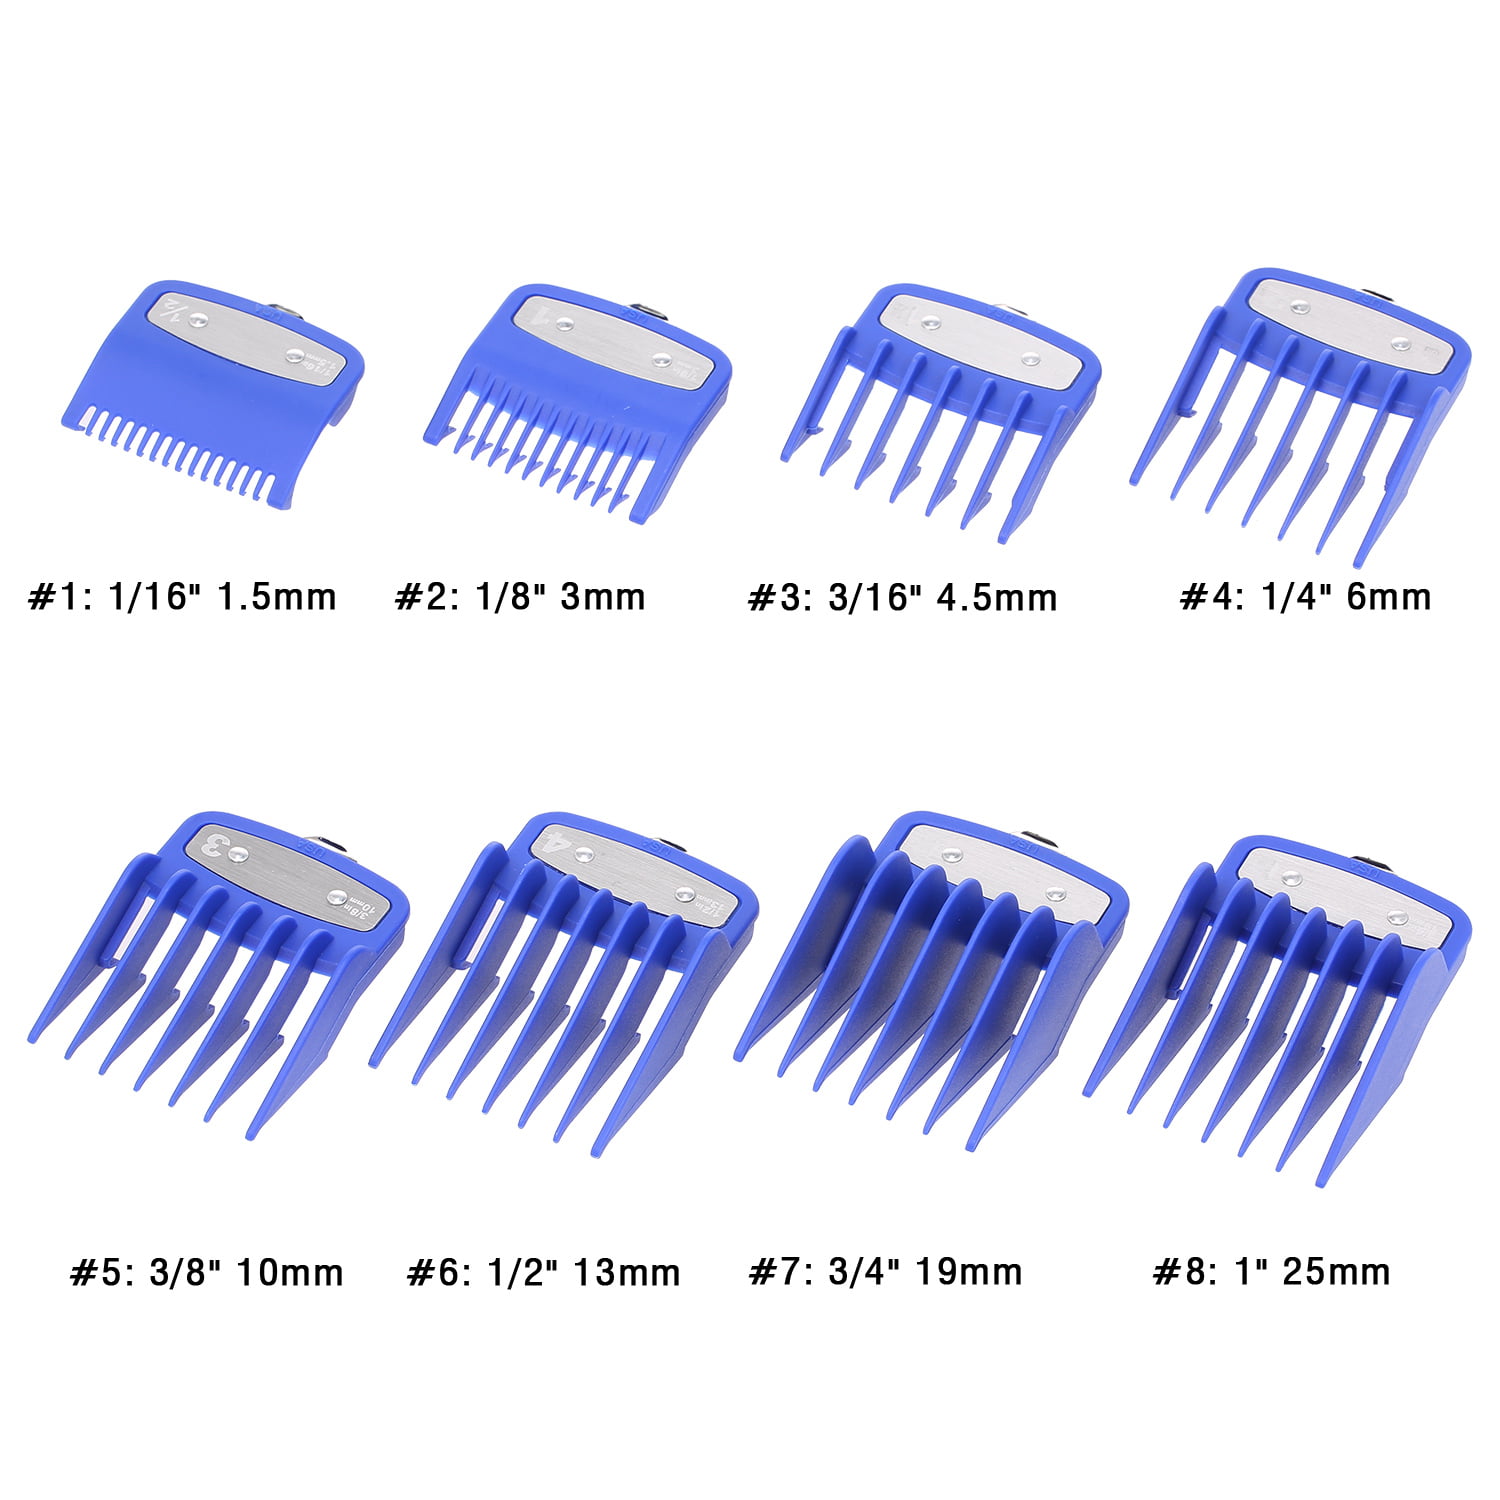 haircut comb sizes